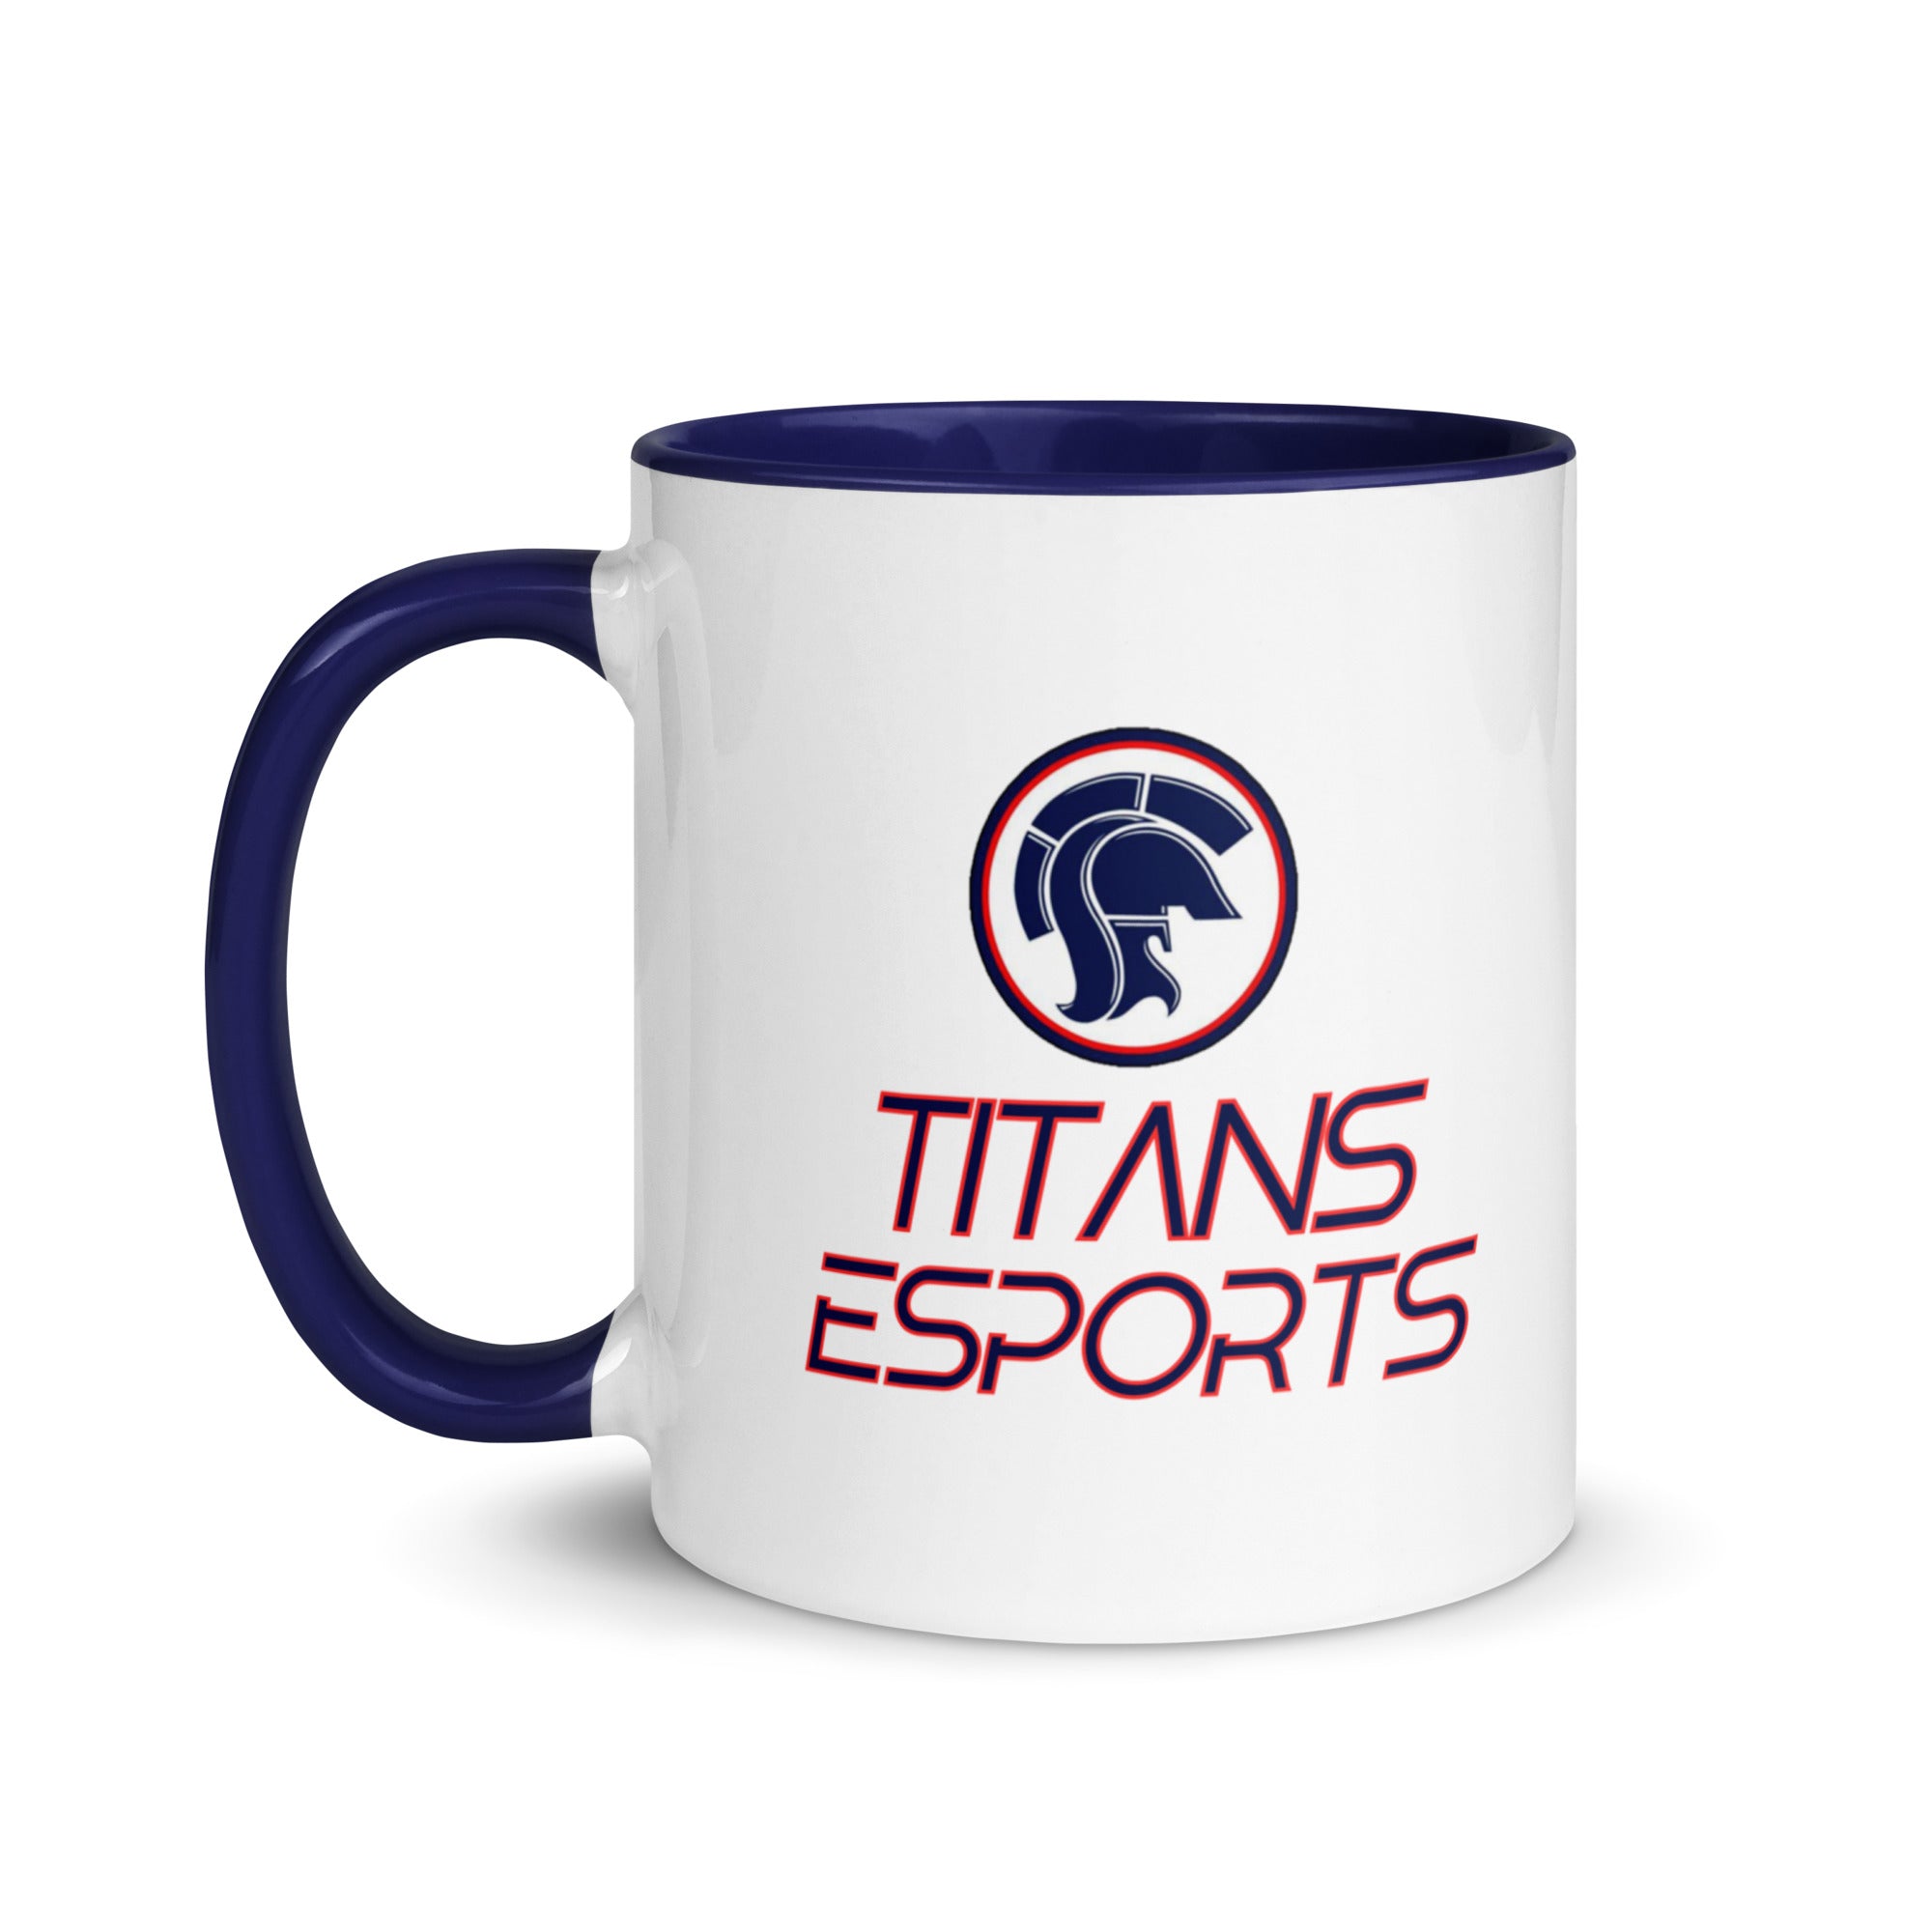 Titans Esports Coffee Mug